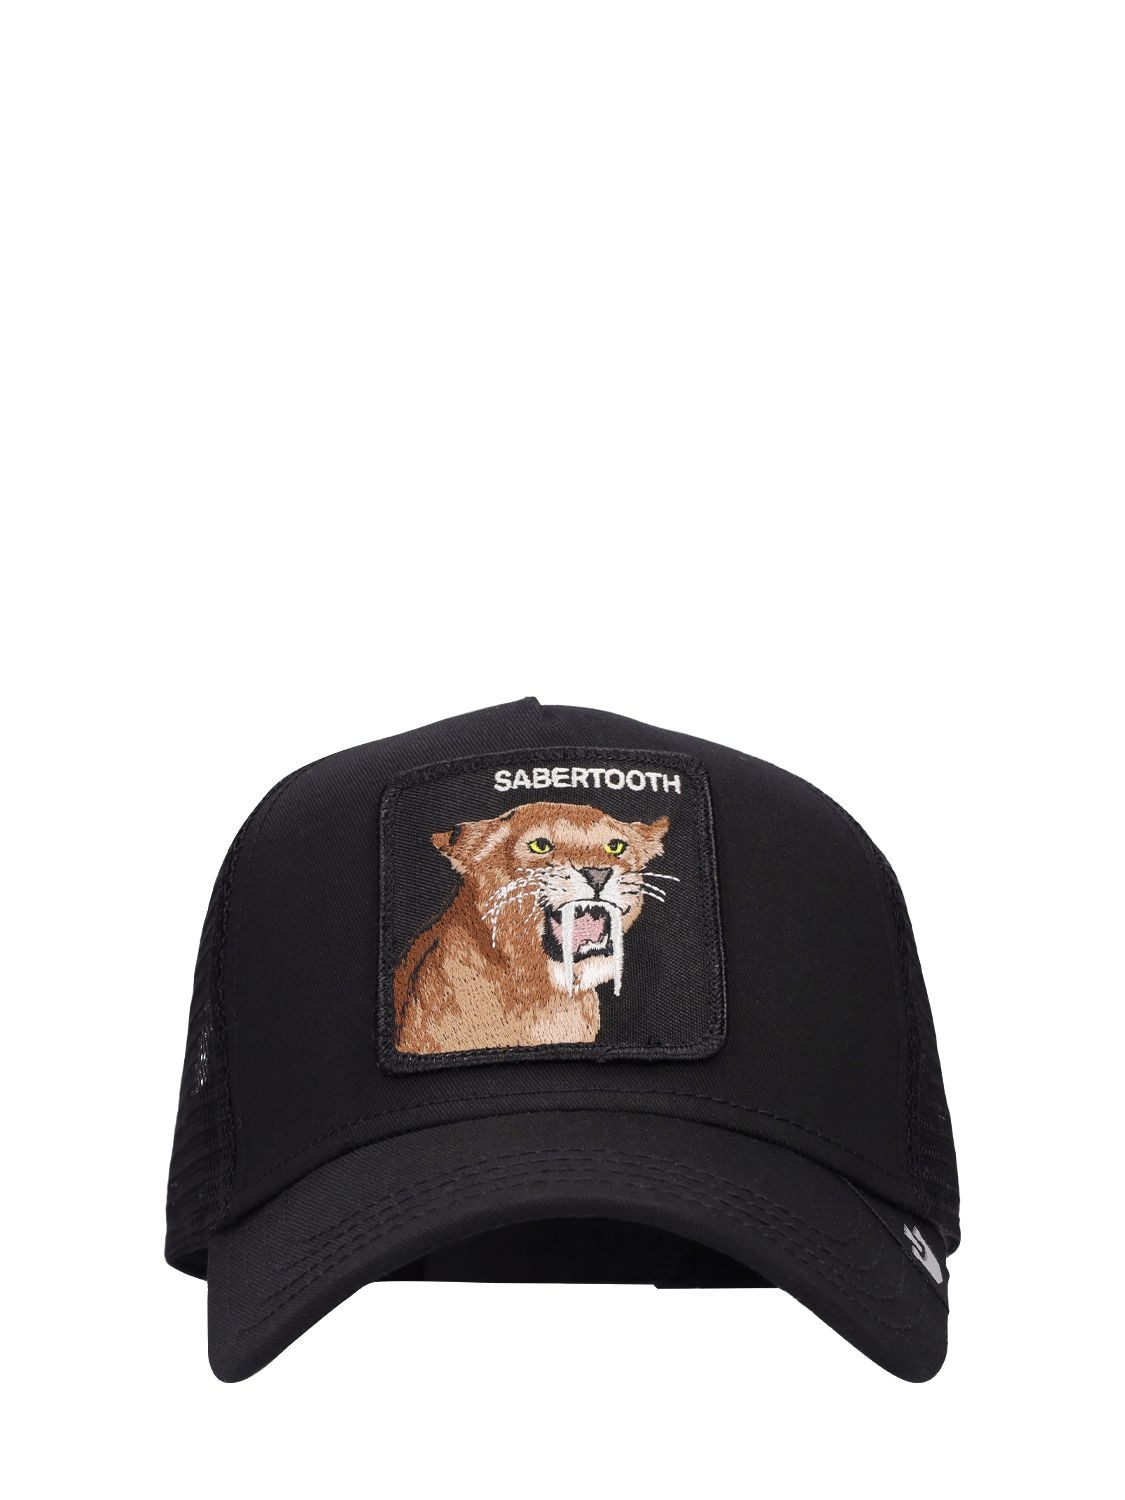 Goorin Bros The Sabretooth Trucker Hat W/ Patch In Black